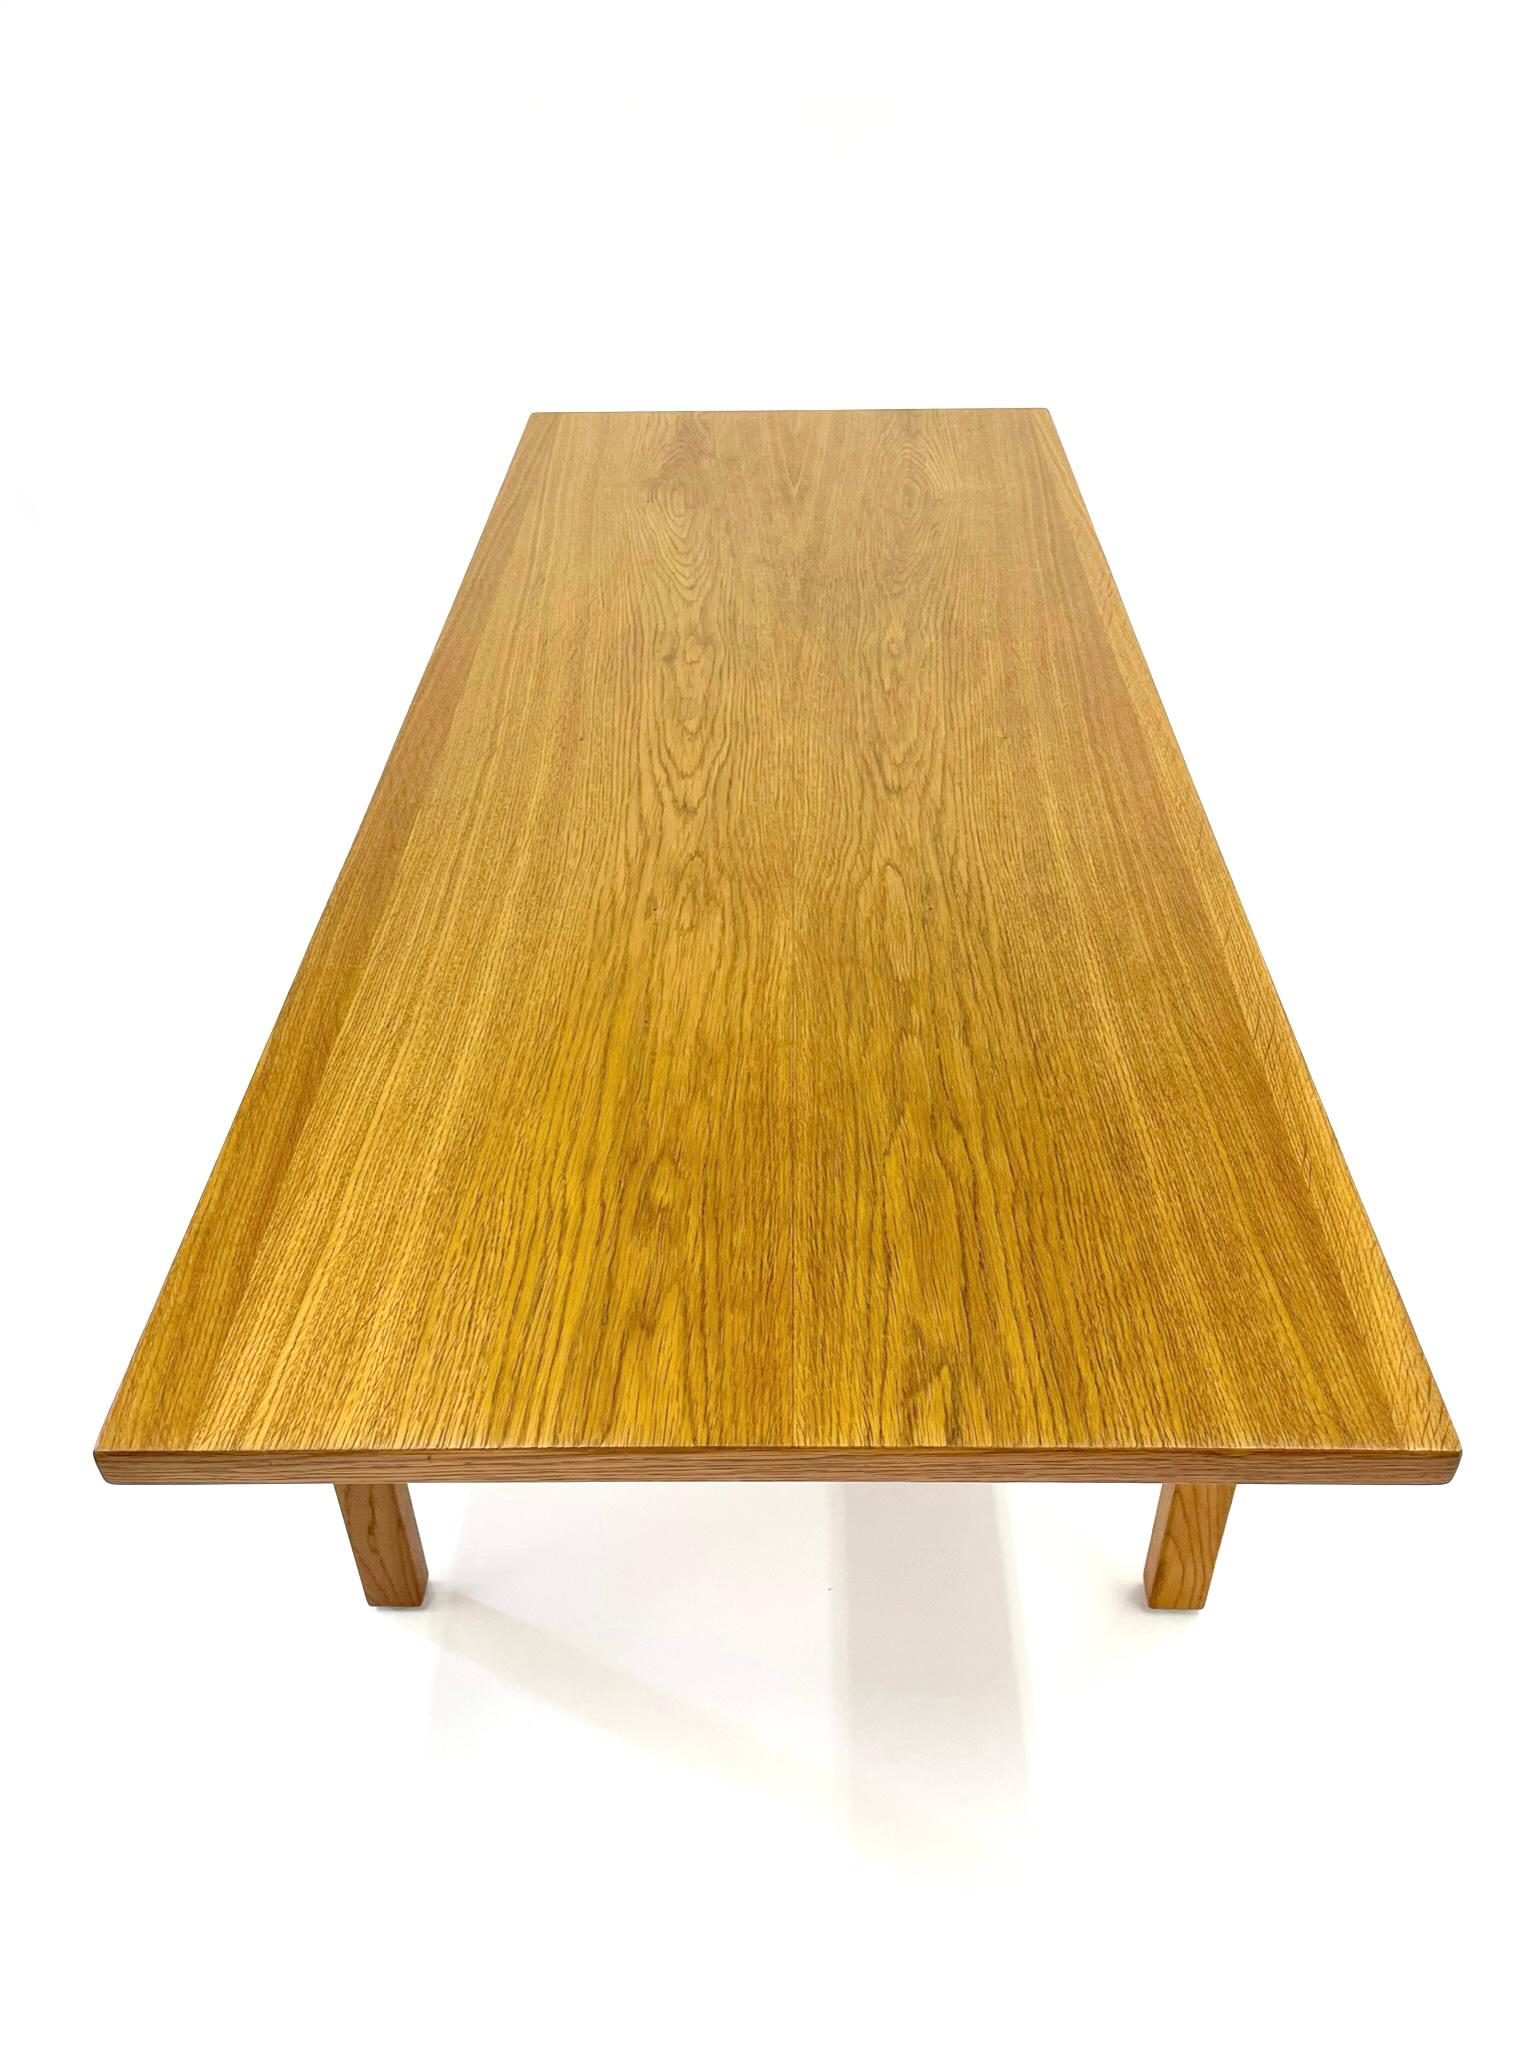 Danish Hans Wegner for Andreas Tuck Oak Coffee Table, Model AT-15 For Sale